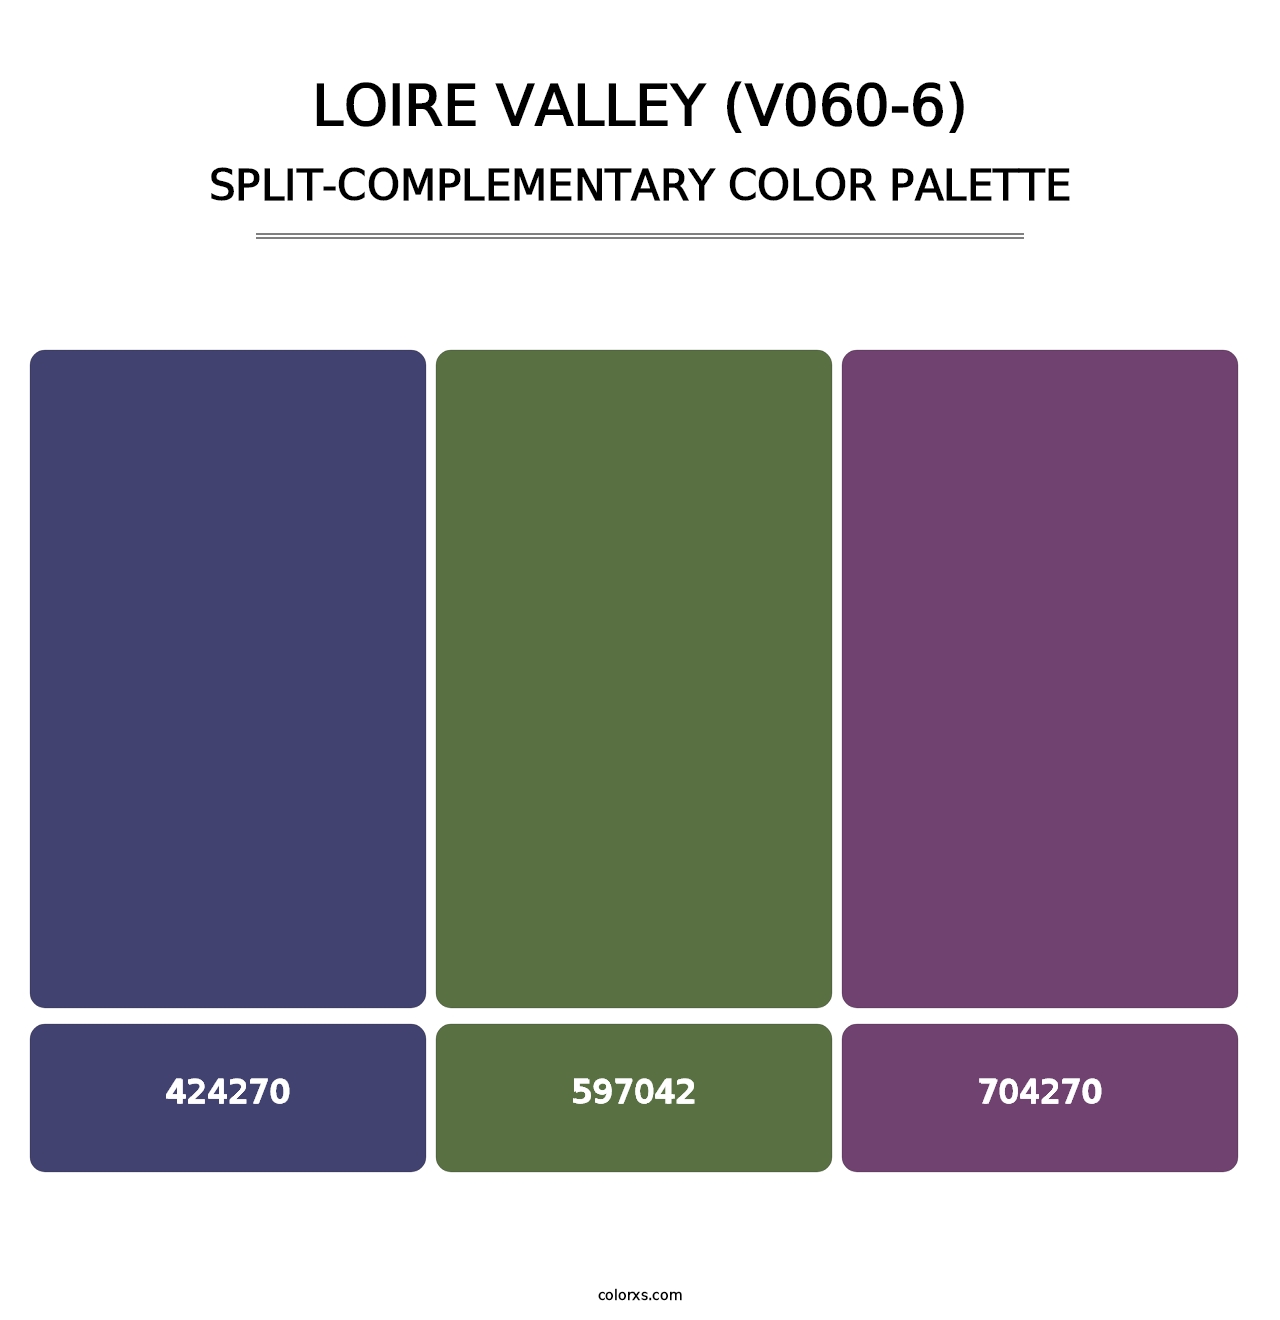 Loire Valley (V060-6) - Split-Complementary Color Palette